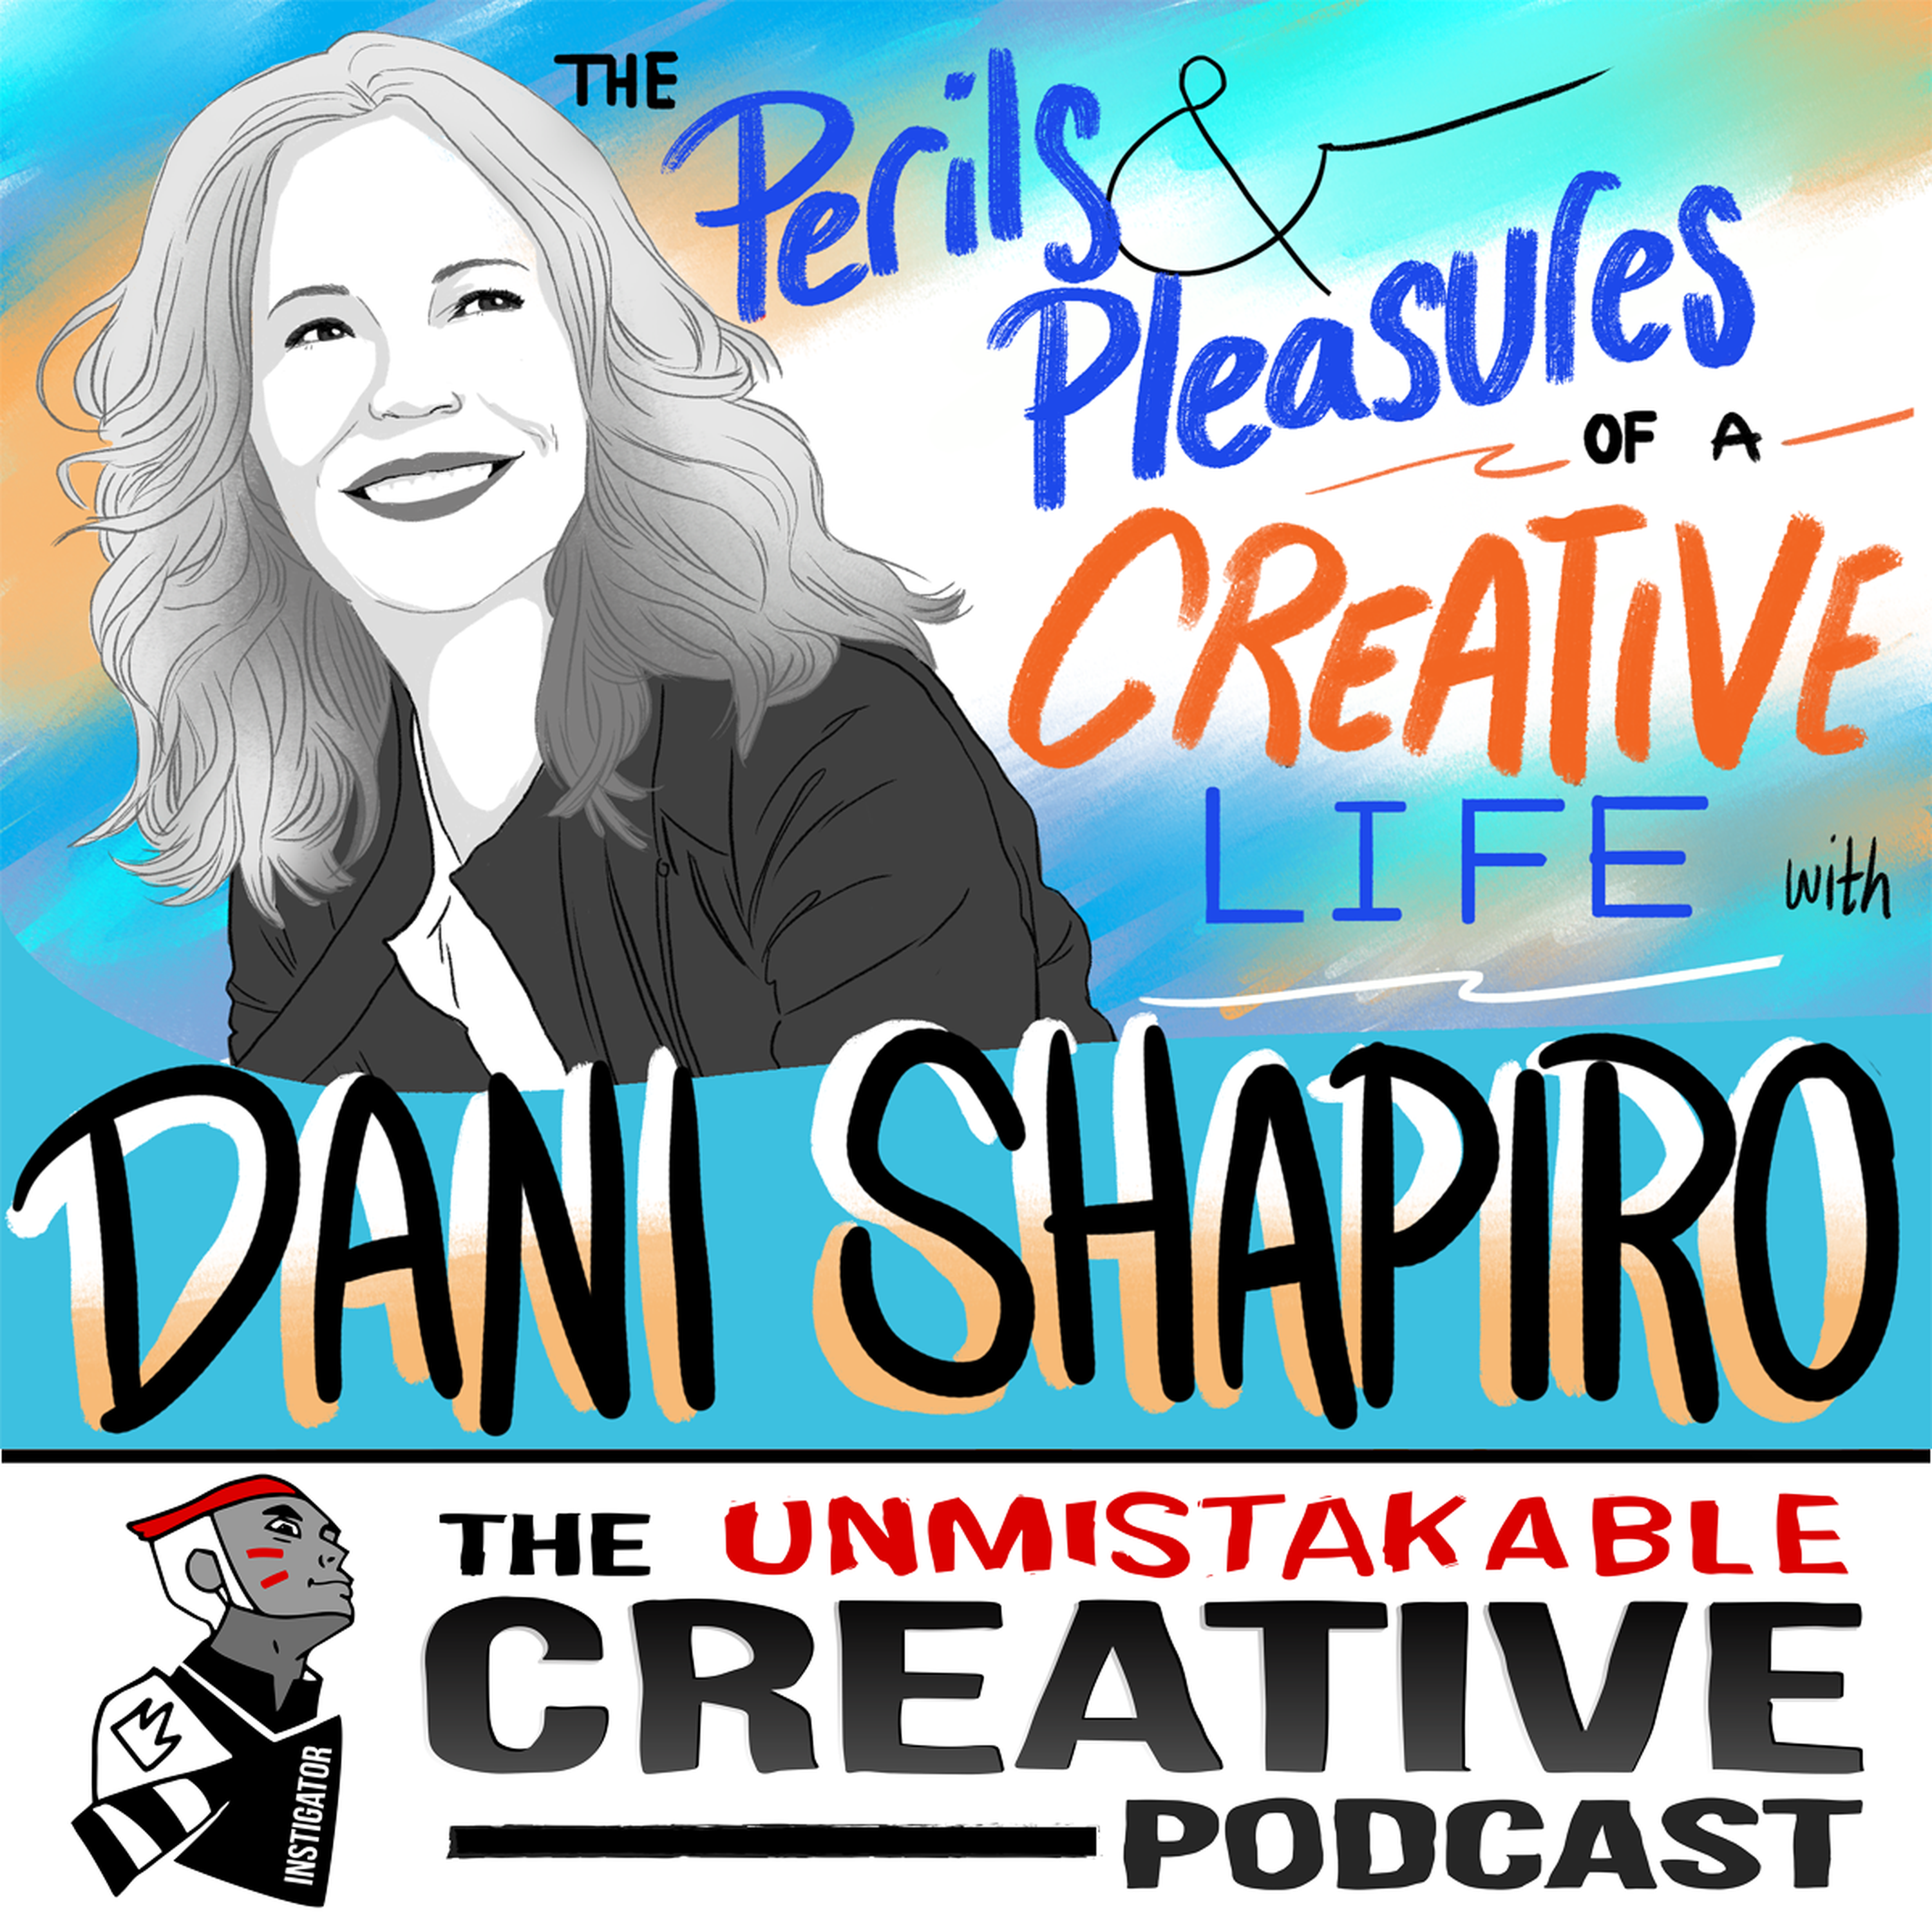 Dani Shapiro: The Perils and Pleasures of a Creative Life Image